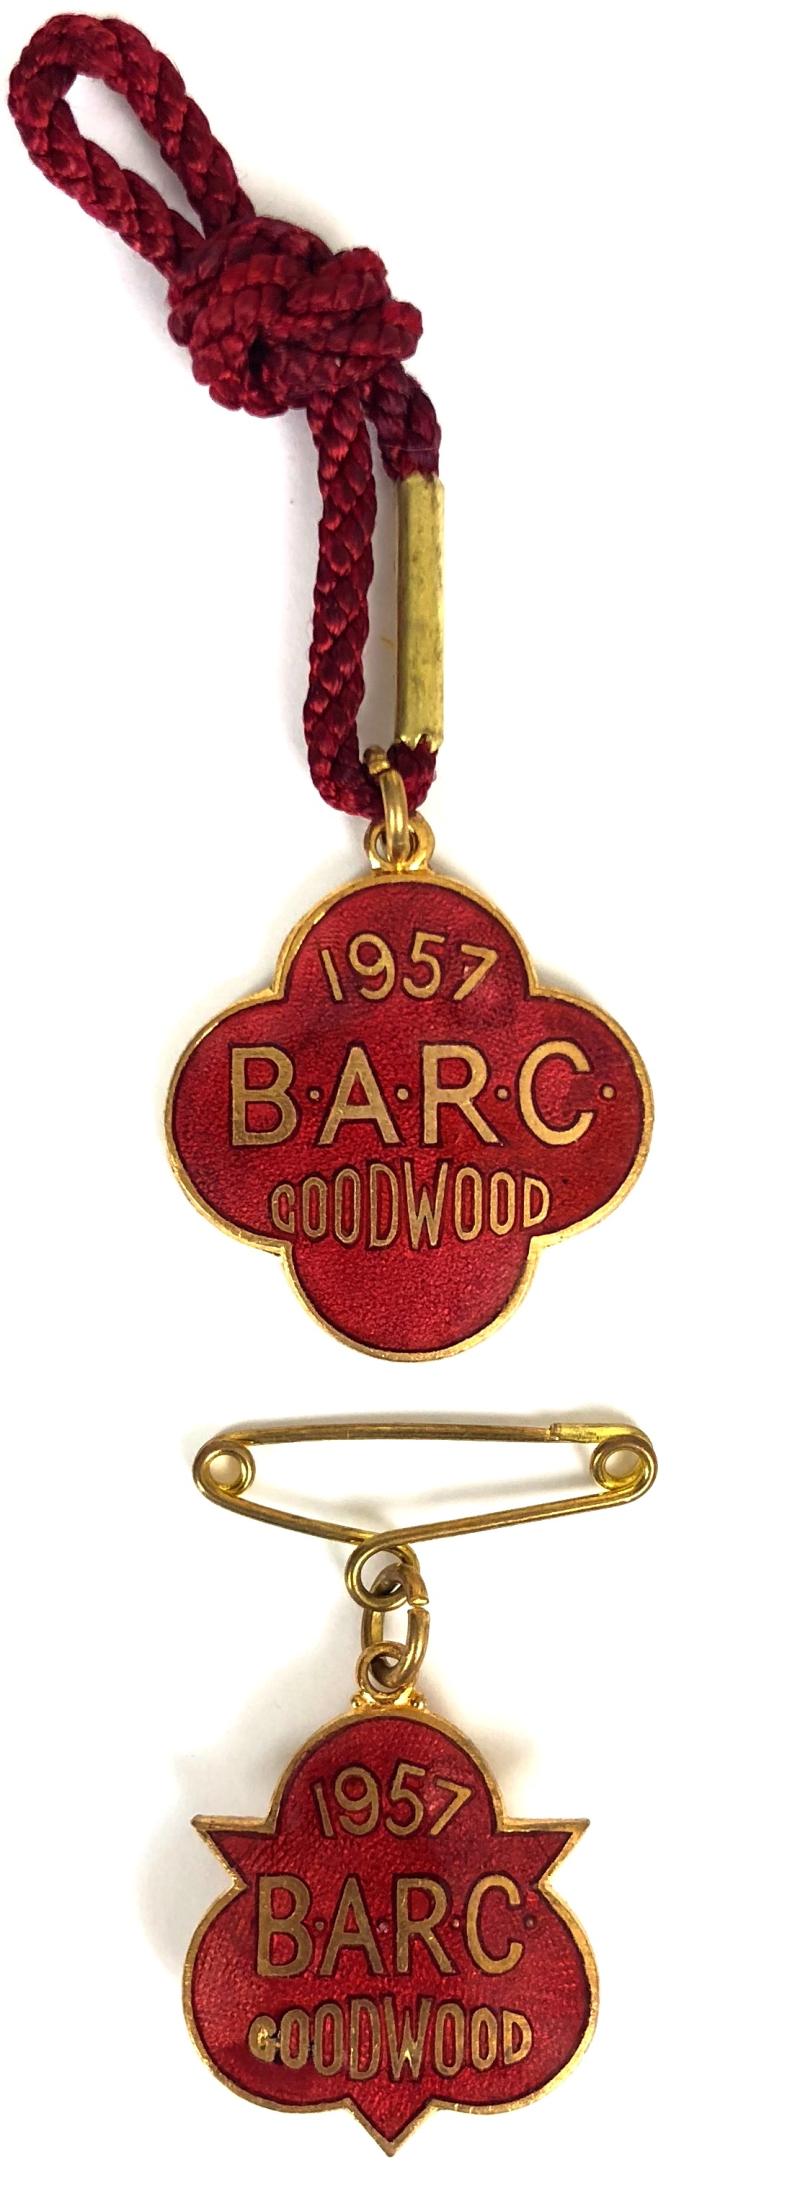 1957 British Automobile Racing Club BARC Goodwood pair of badges